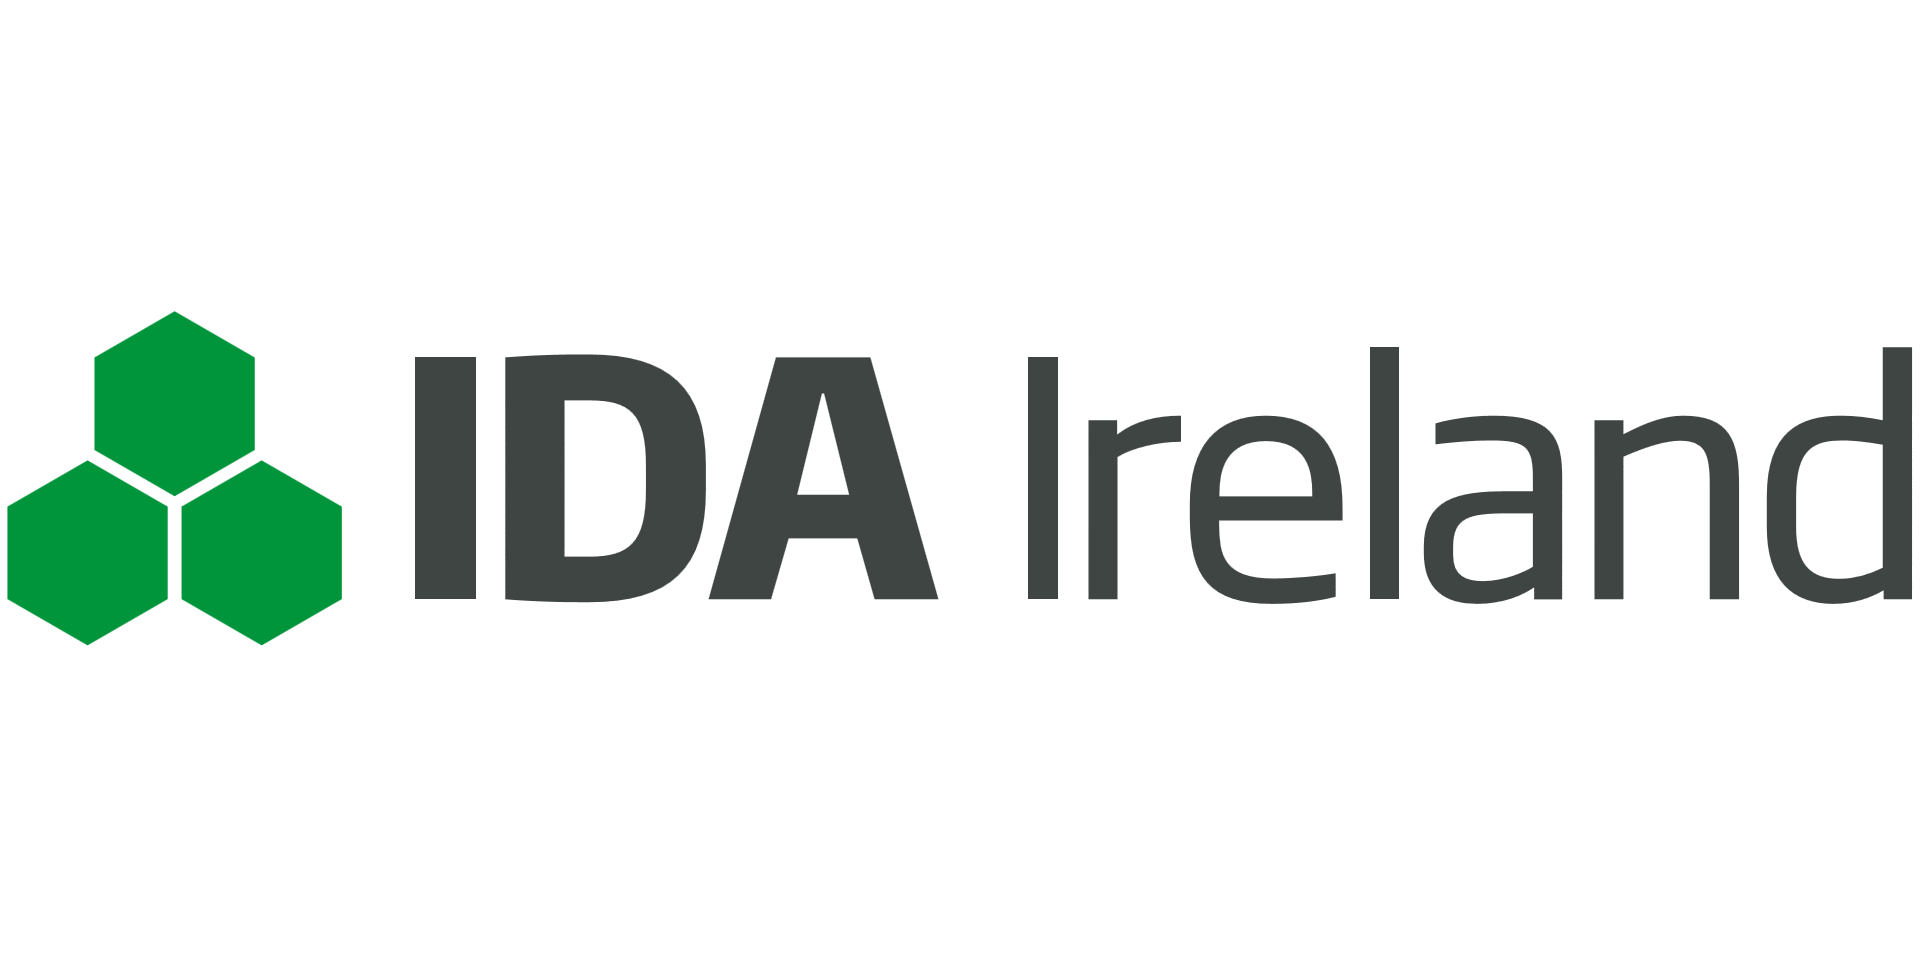 Advanced Manufacturing in Ireland - IDA infographic